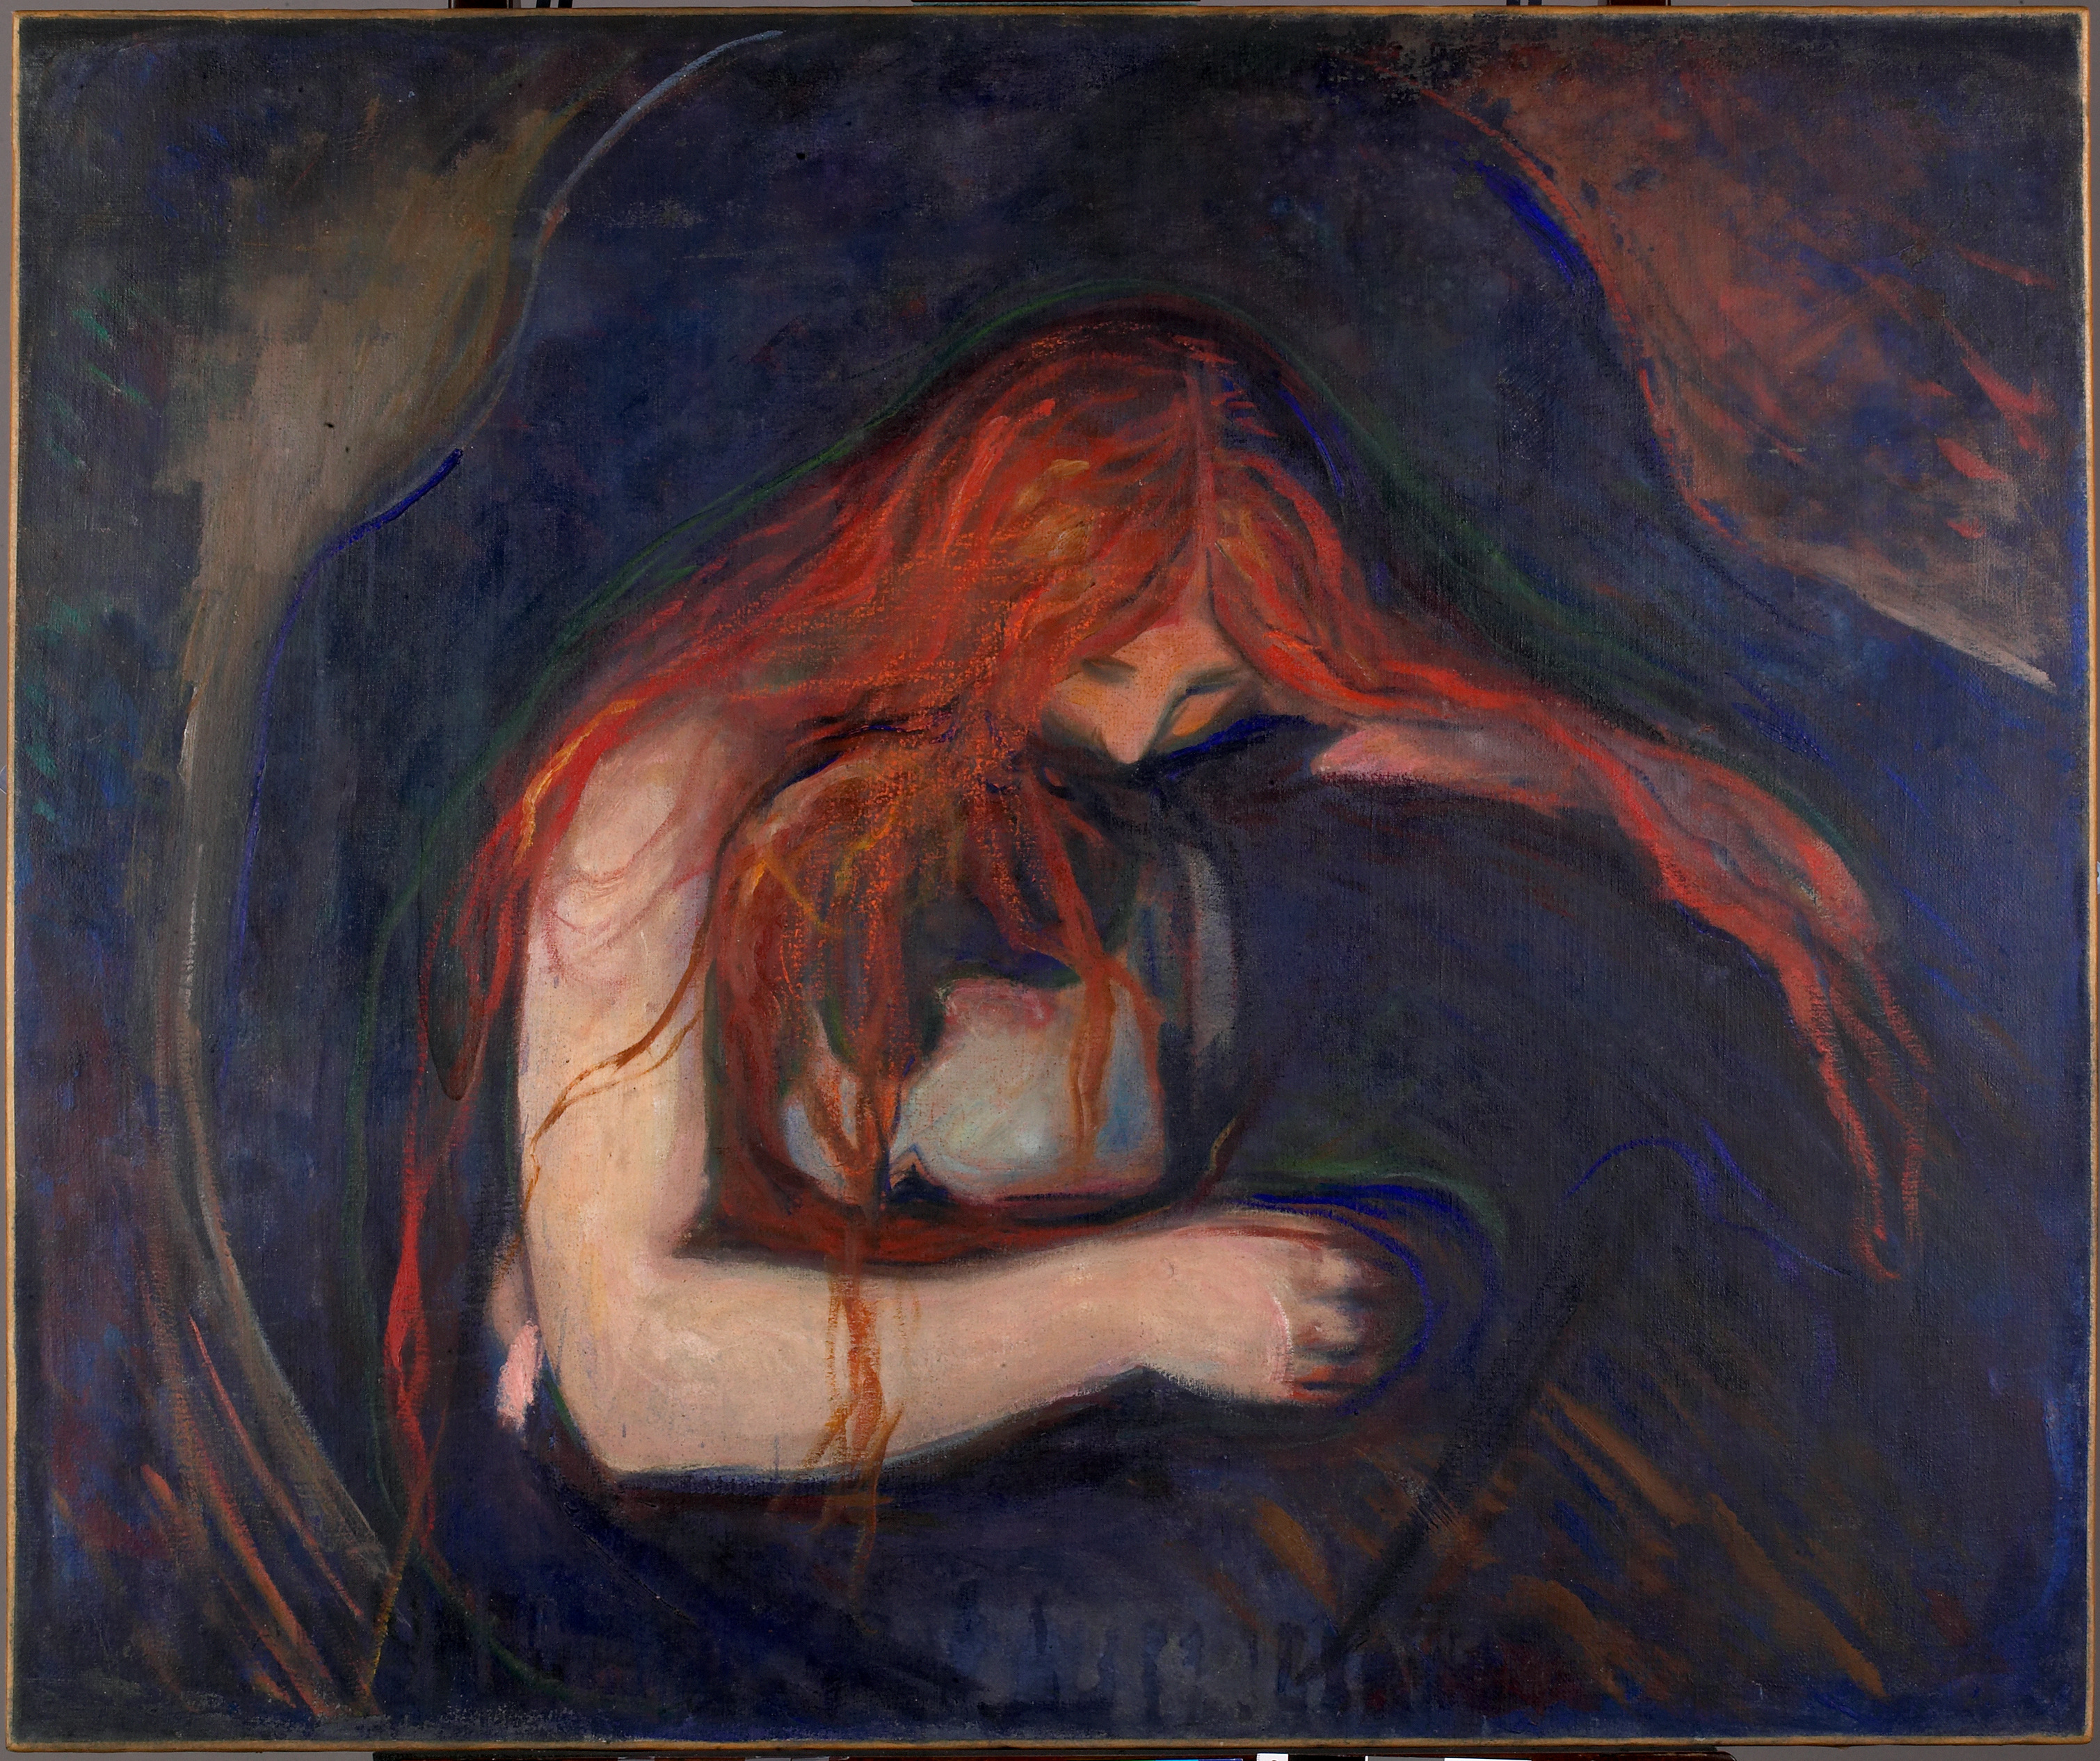 Vampira by Edvard Munch - 1895 